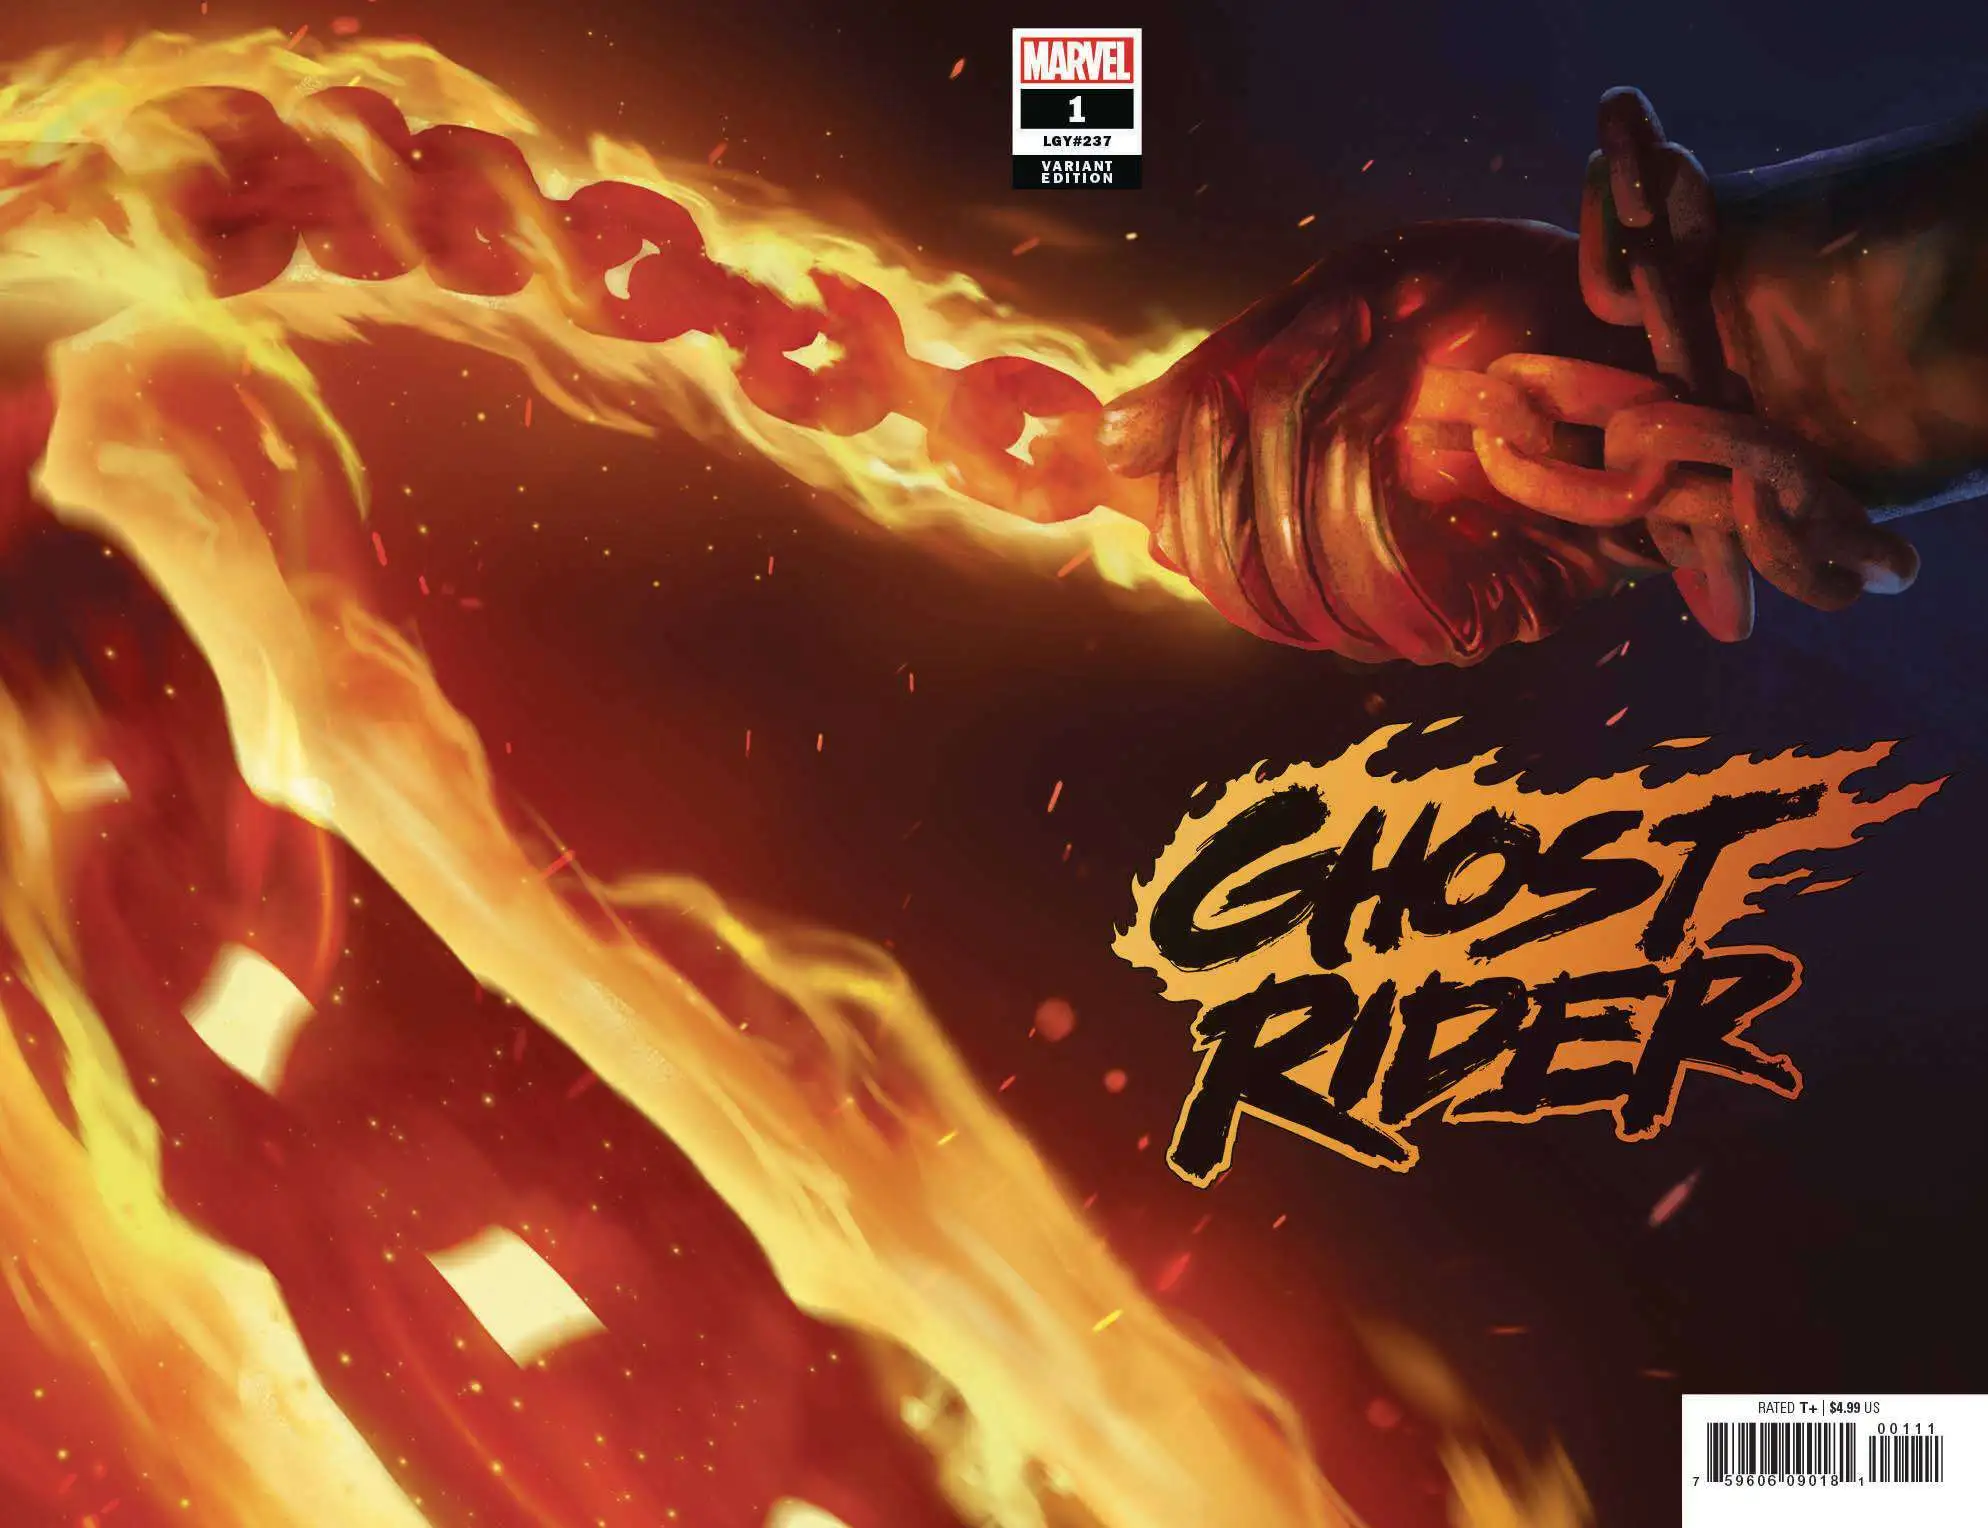 GHOST RIDER #1 Wraparound Variant Cover Vol 9 Marvel Comics 2019 AUG190981